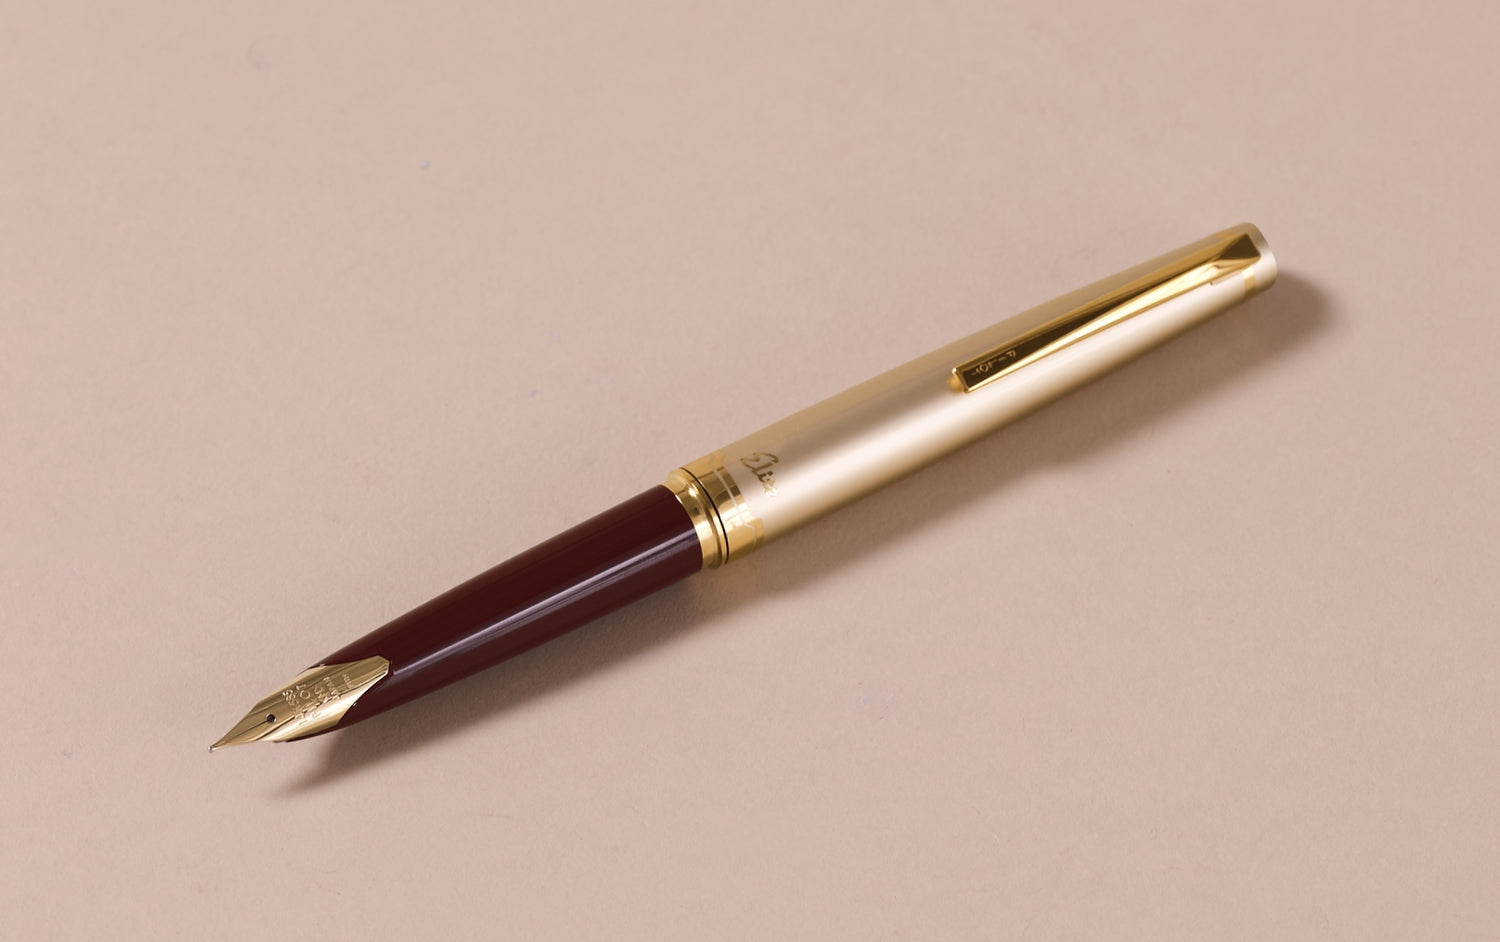 1968 Burgundy and Satin Rose Gold "Elite" Pocket Fountain Pen